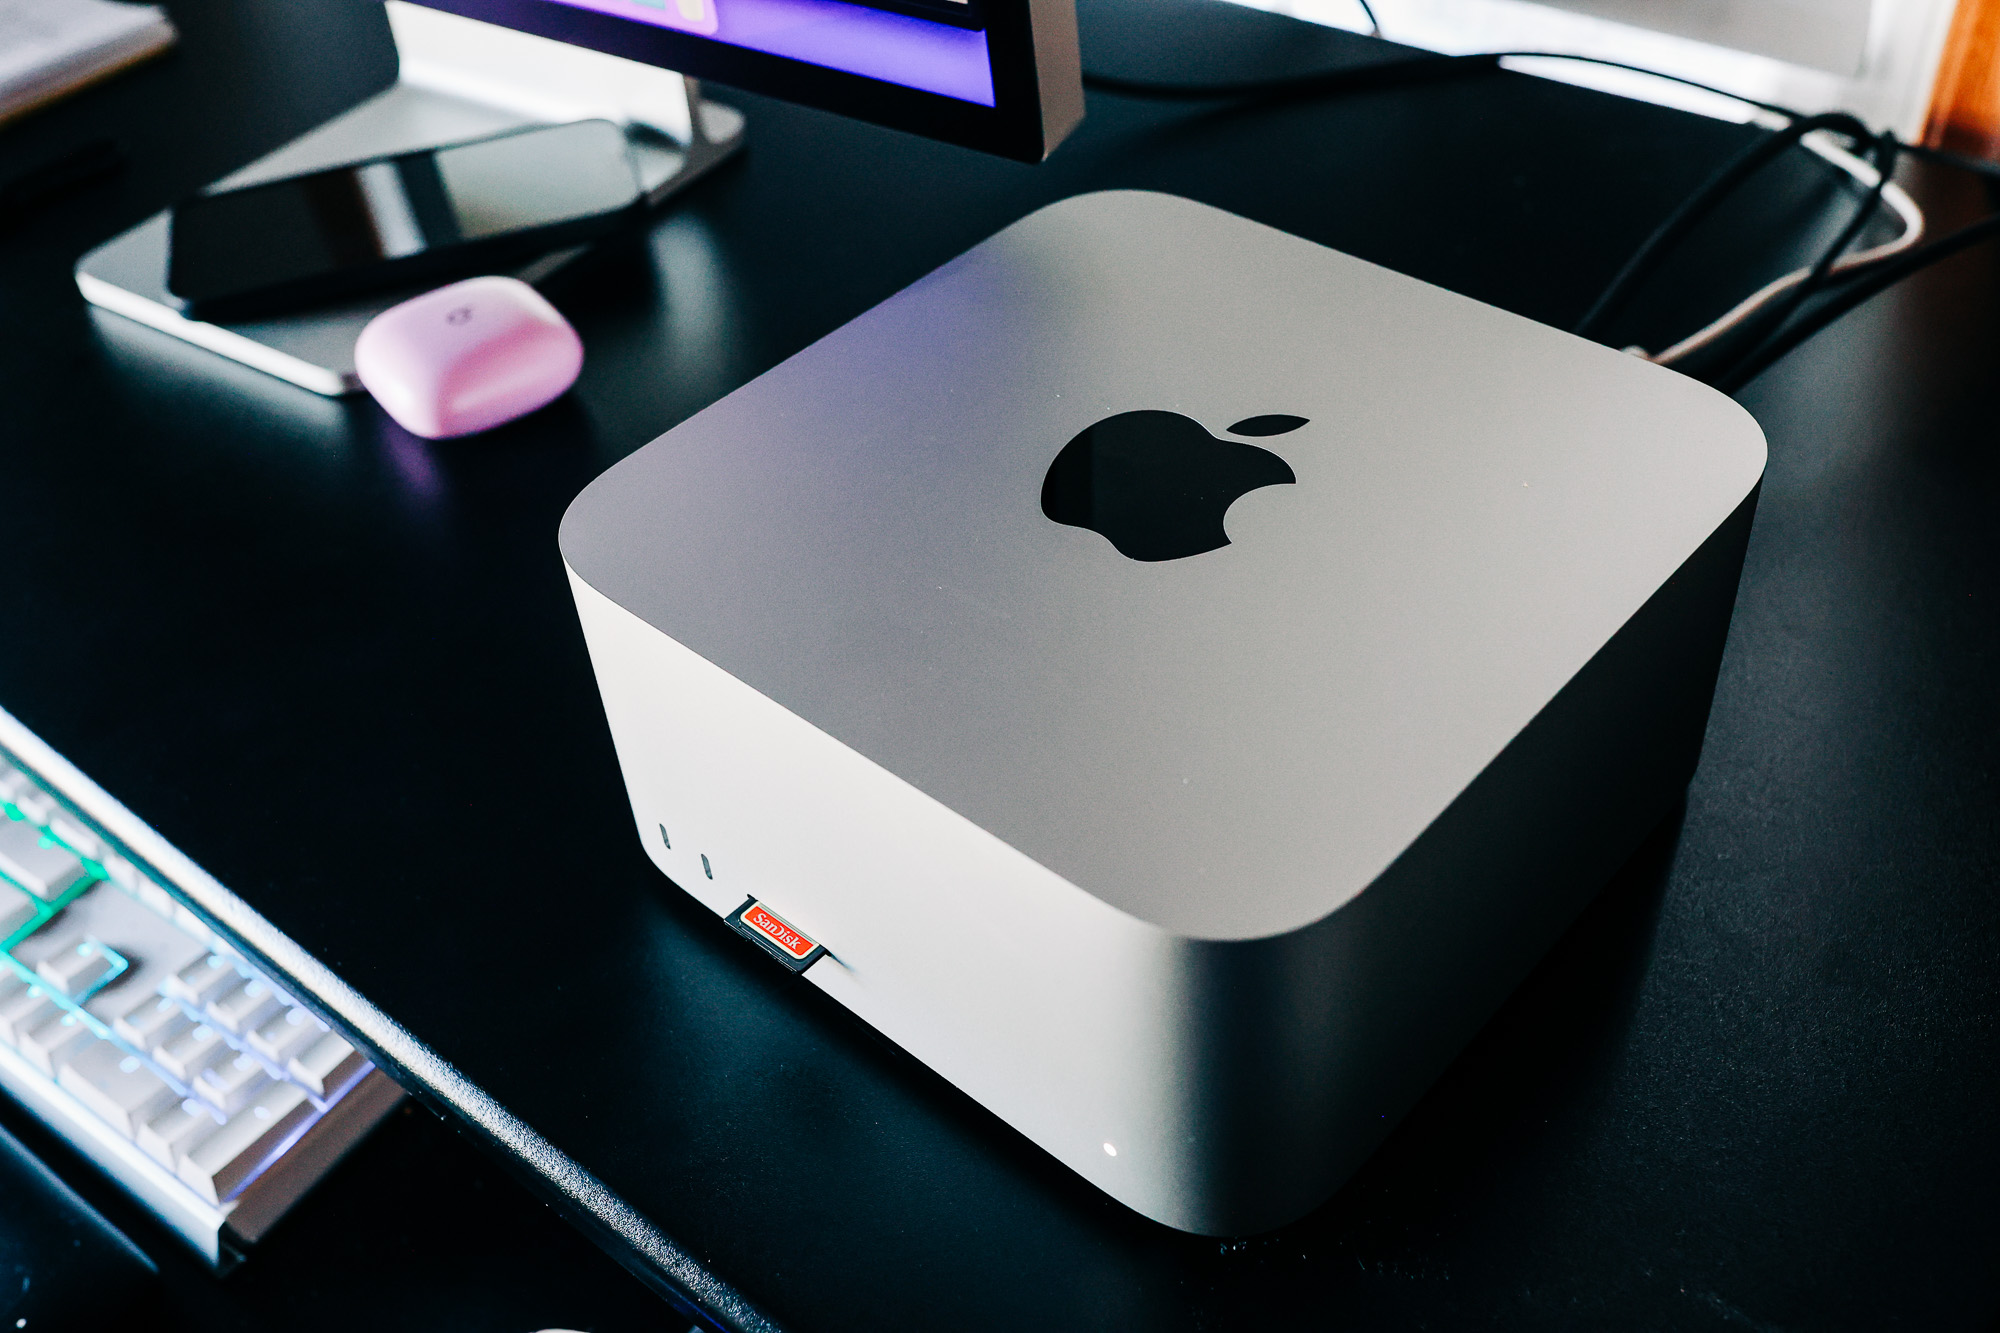 Apple Mac Studio review: Plenty of power